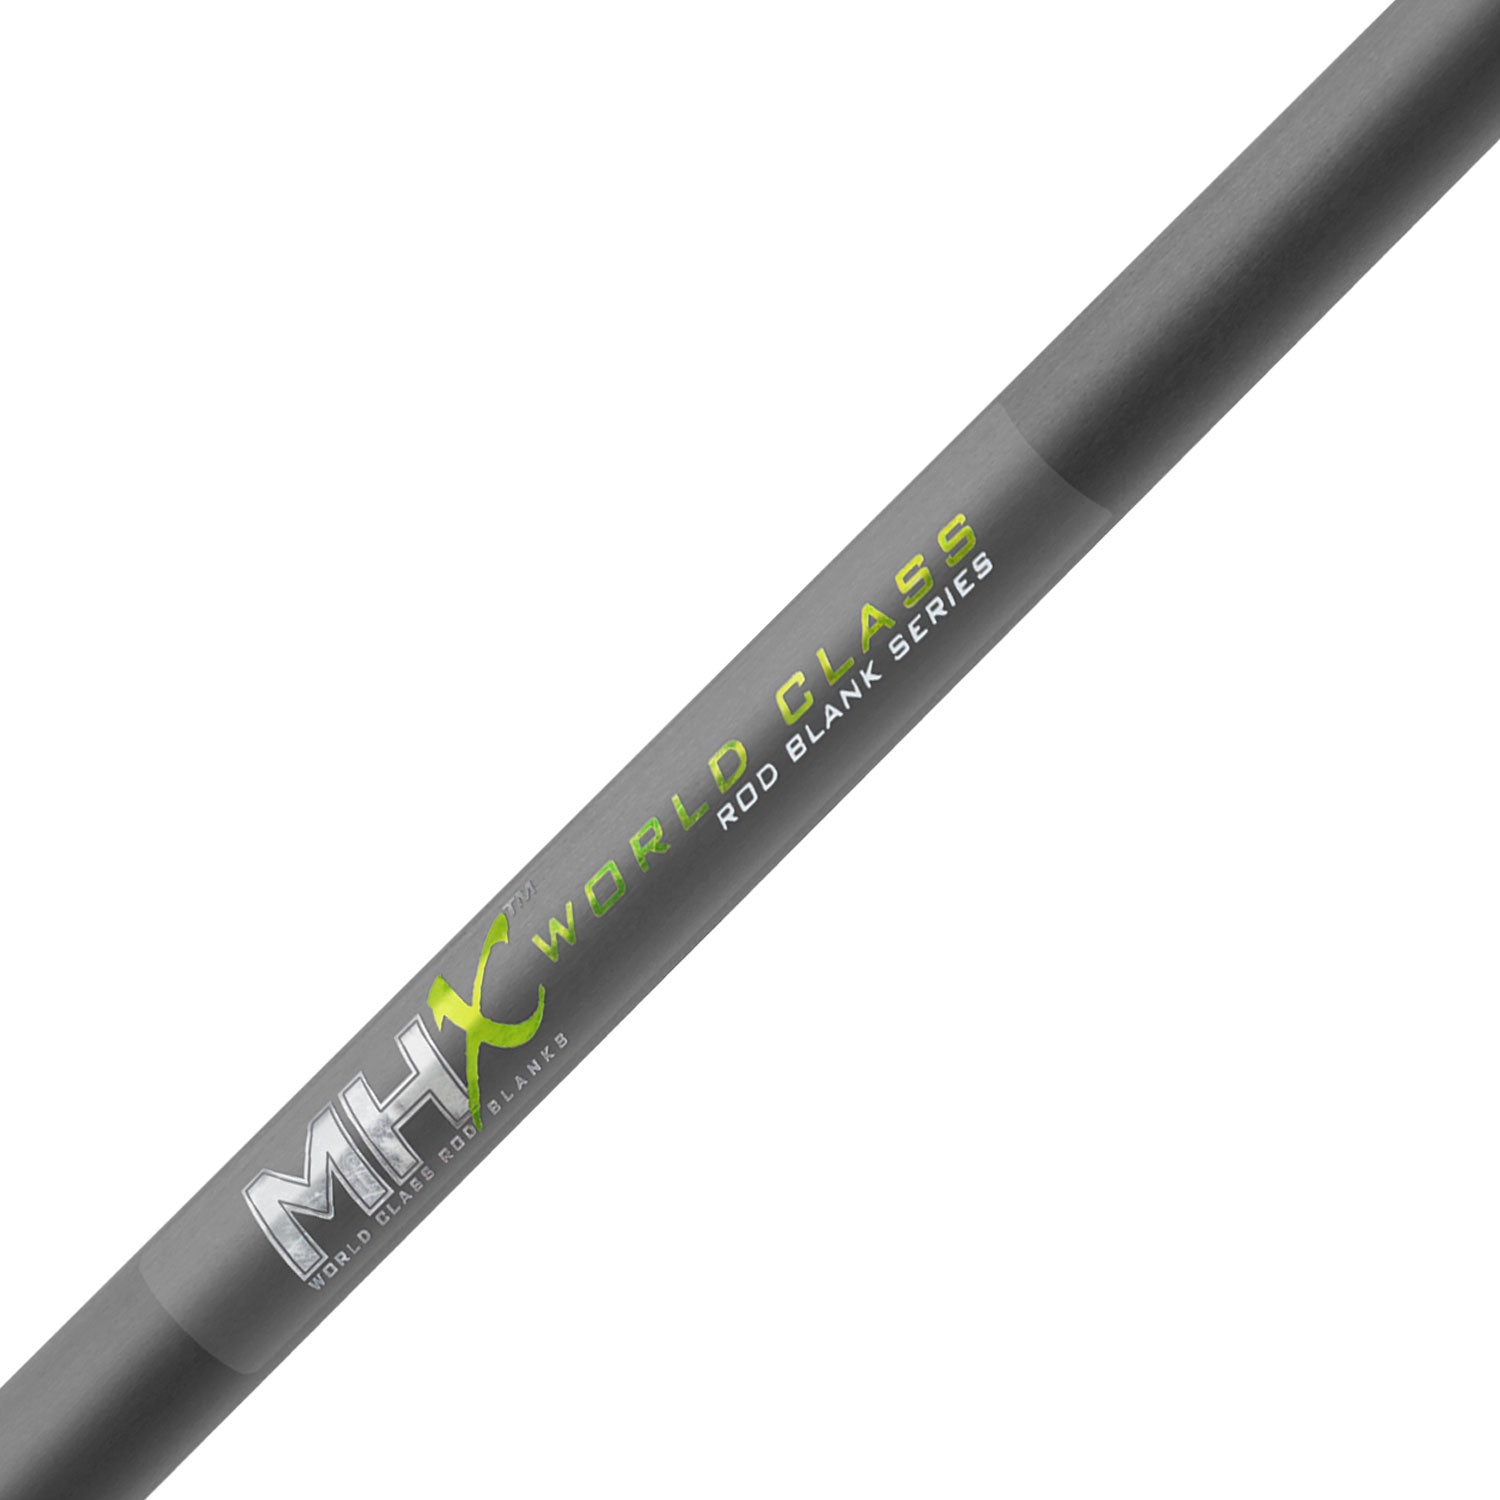 MHX 6'11 Medium Spin Jig Rod Blank - SJ833-MHX